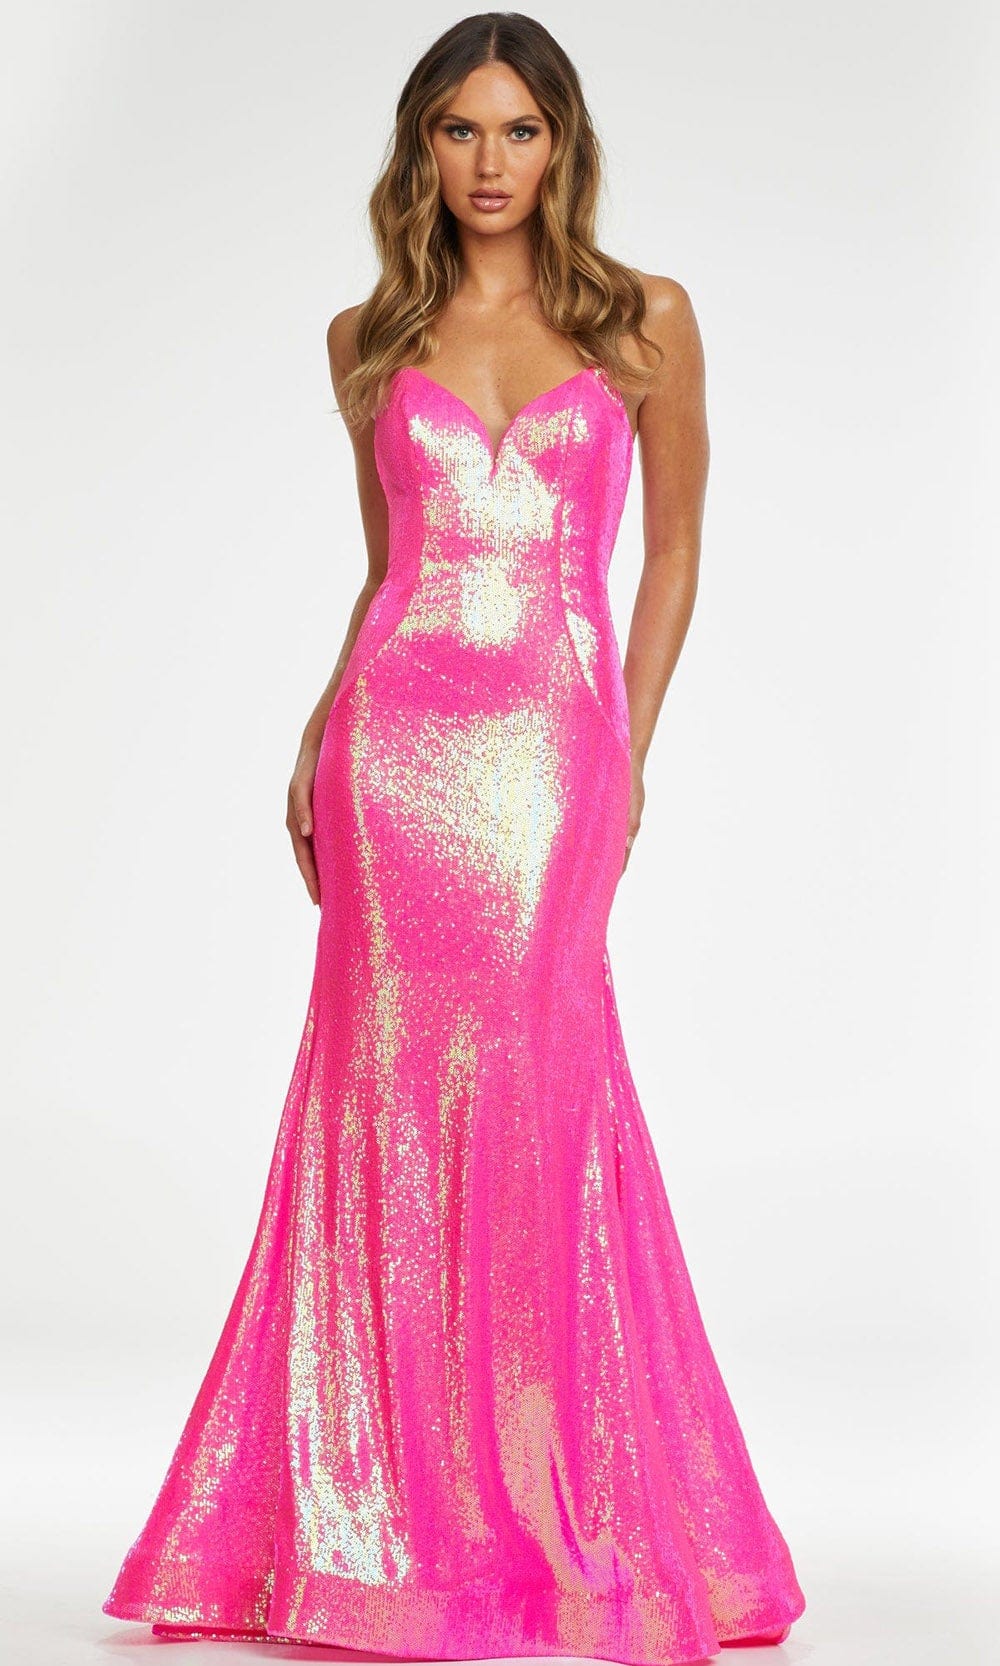 Ashley Lauren - 11163 Strapless V-Neck Sequin Gown Prom Dresses 0 / Neon Pink